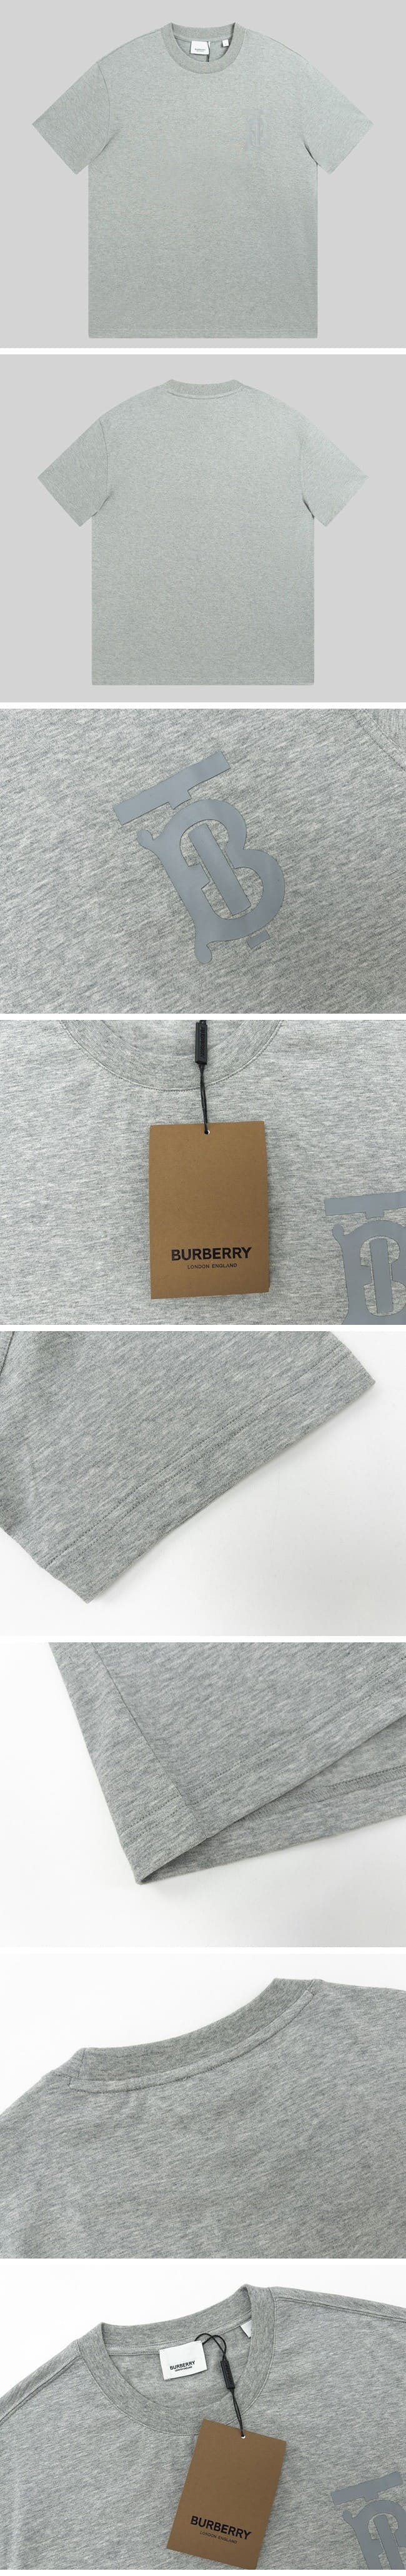 Burberry Monogram Motif Cotton Oversized Tee Grey バーバリー モノグラム モチーフ オーバーサイズ Tシャツ グレー